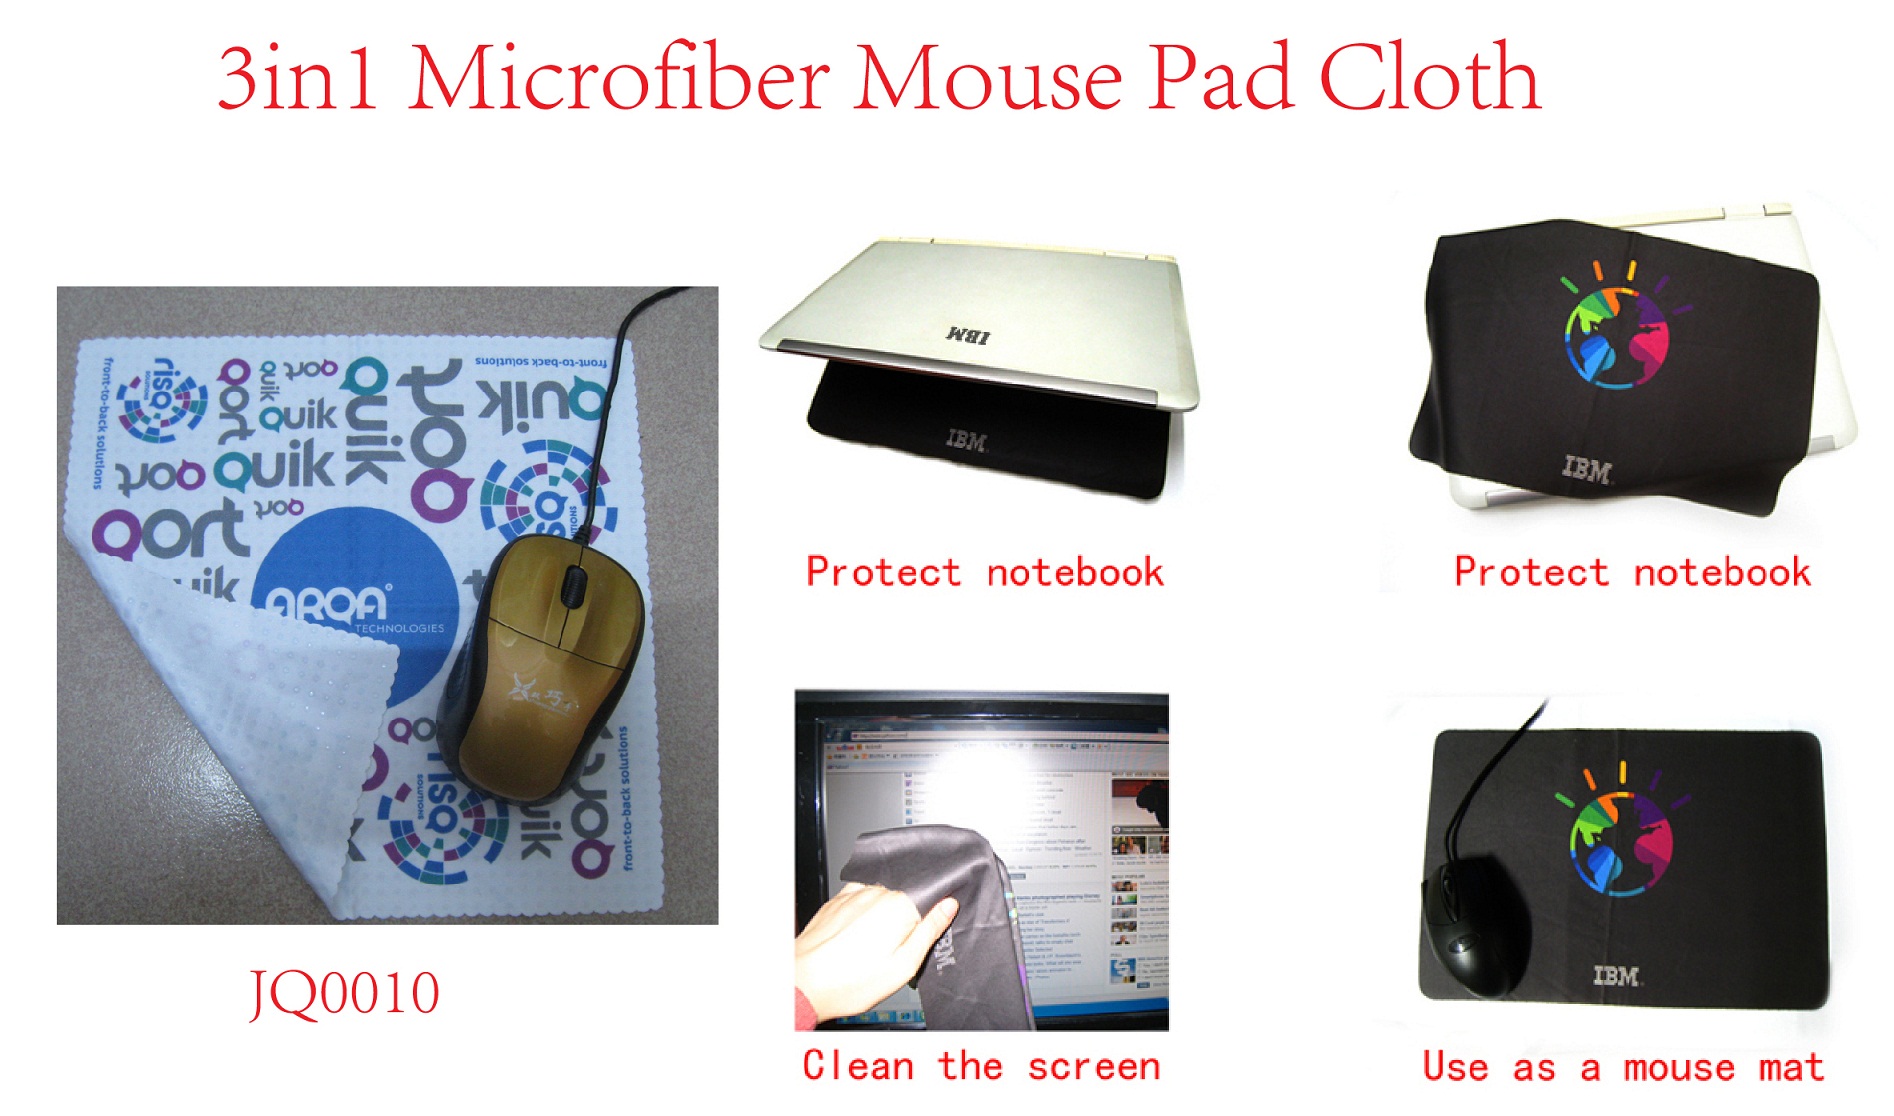 Microfiber mouse pad cloth